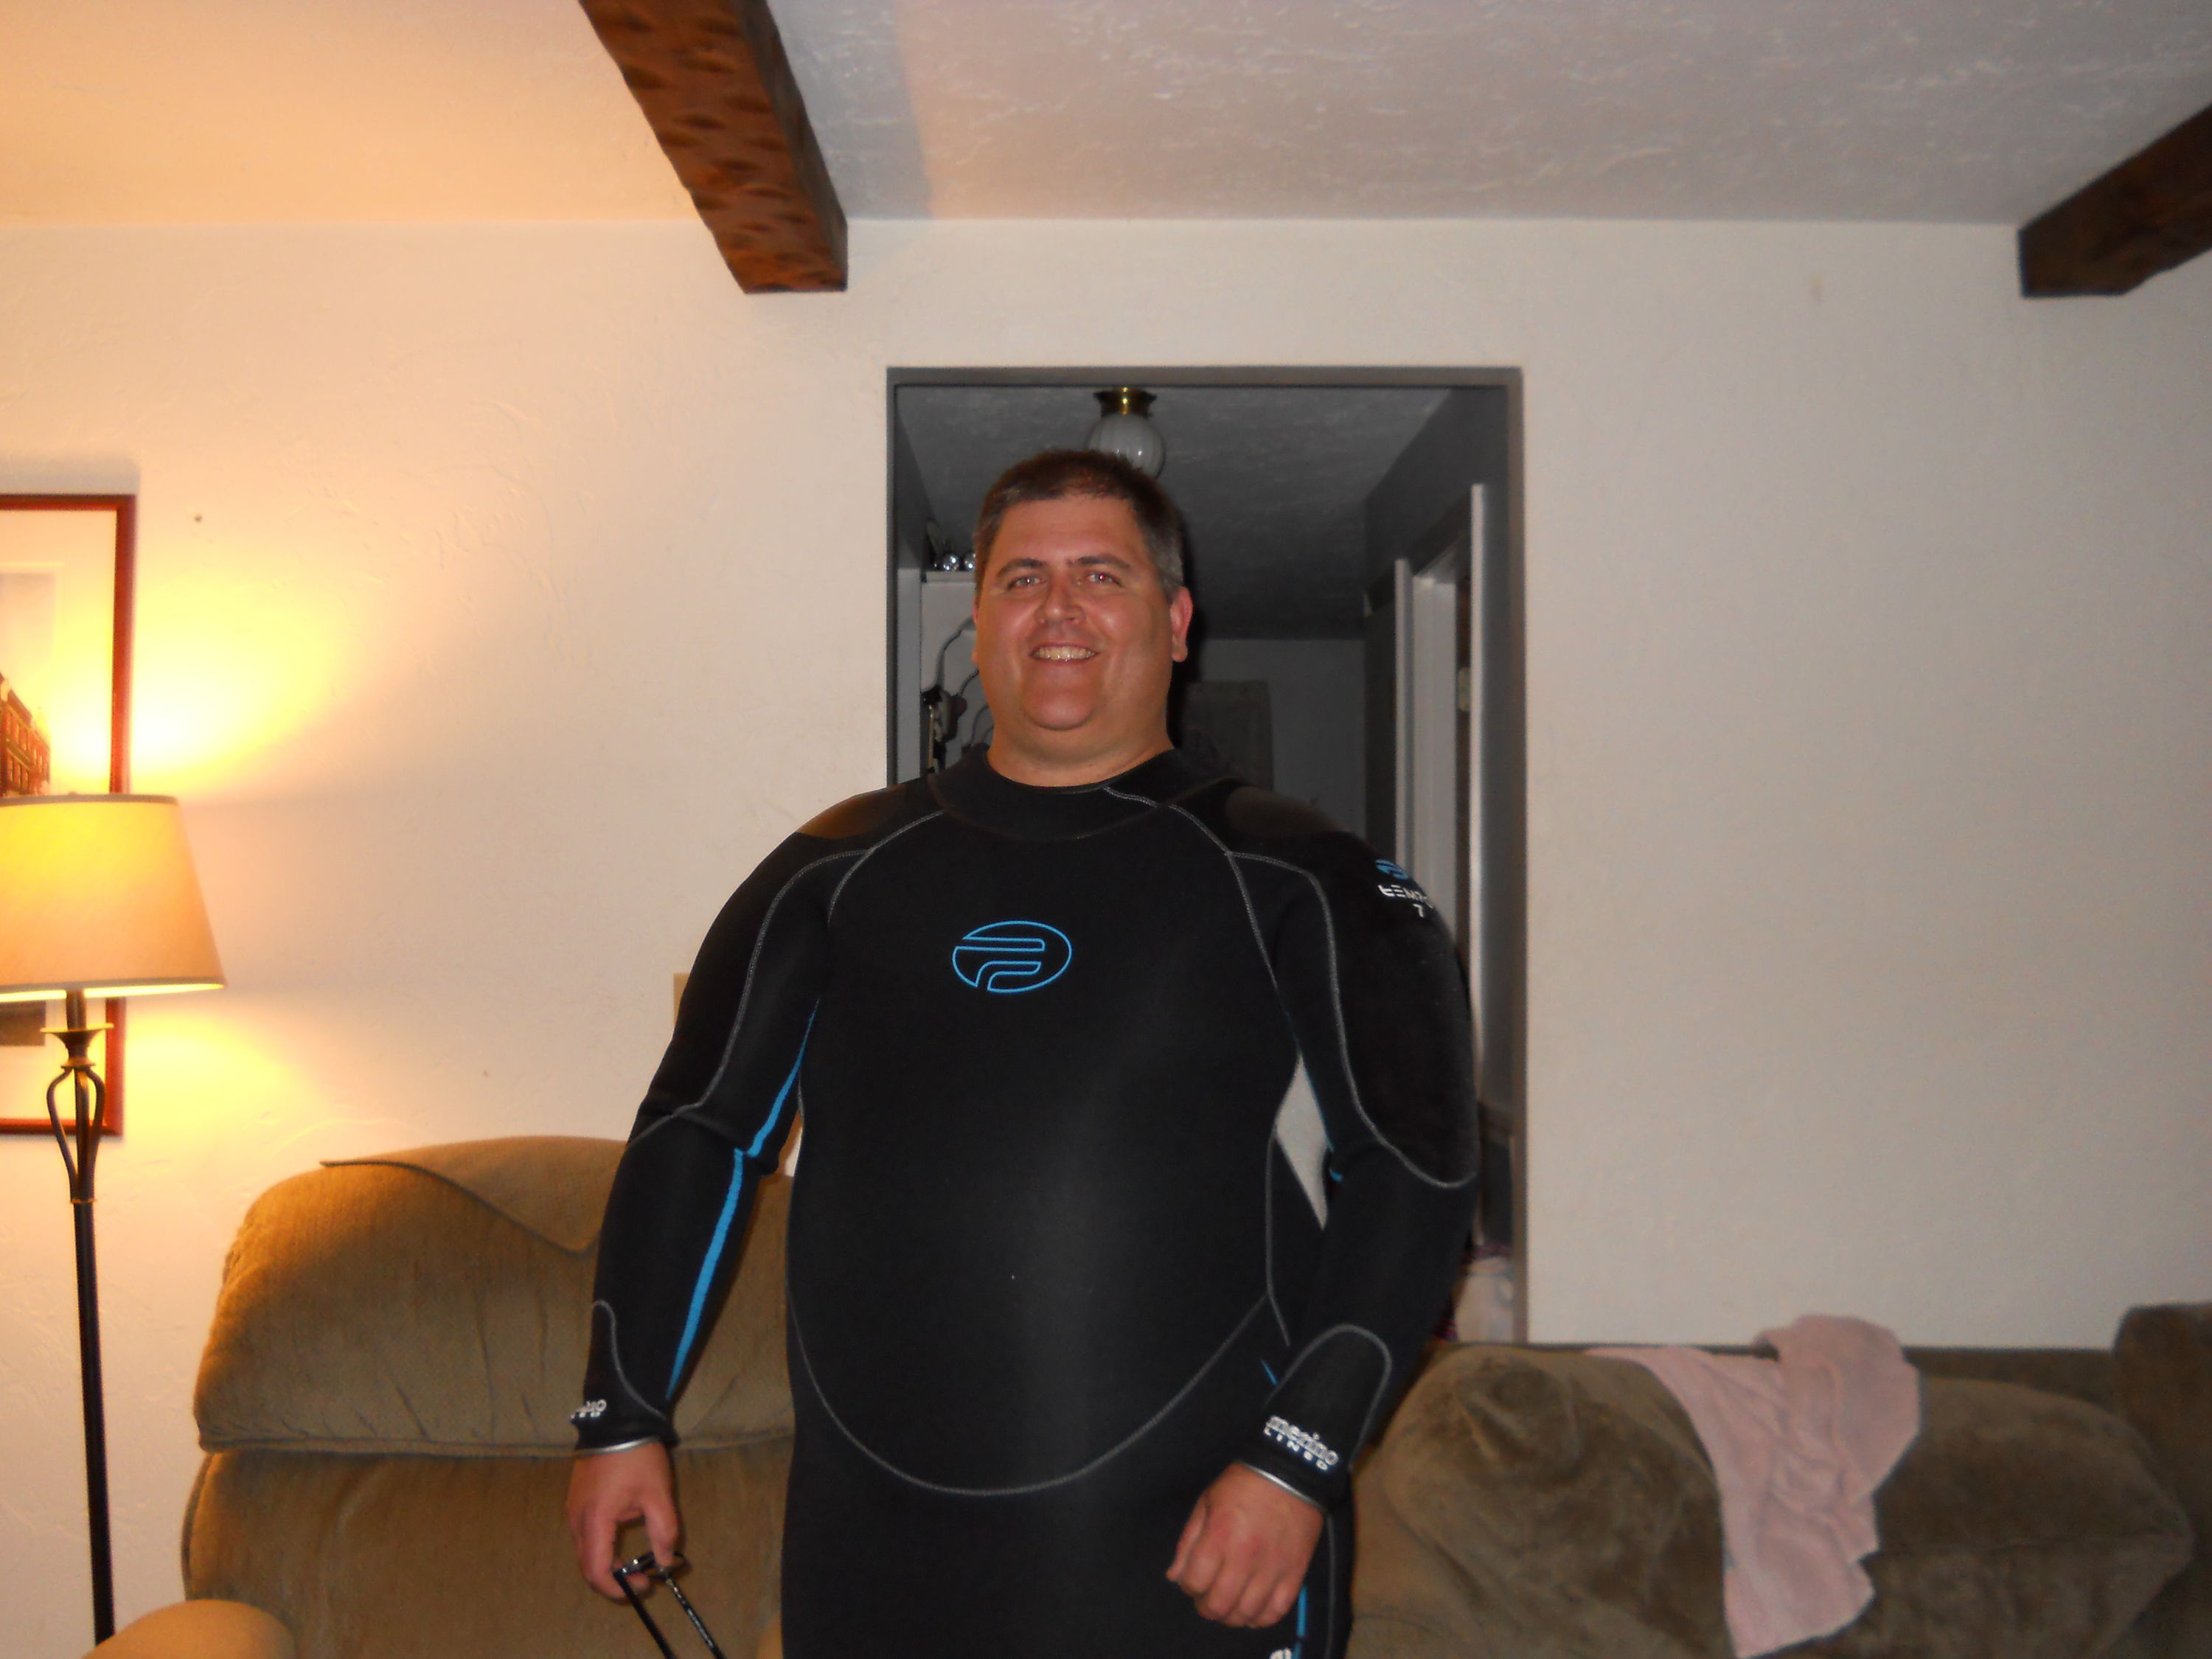 New wetsuit